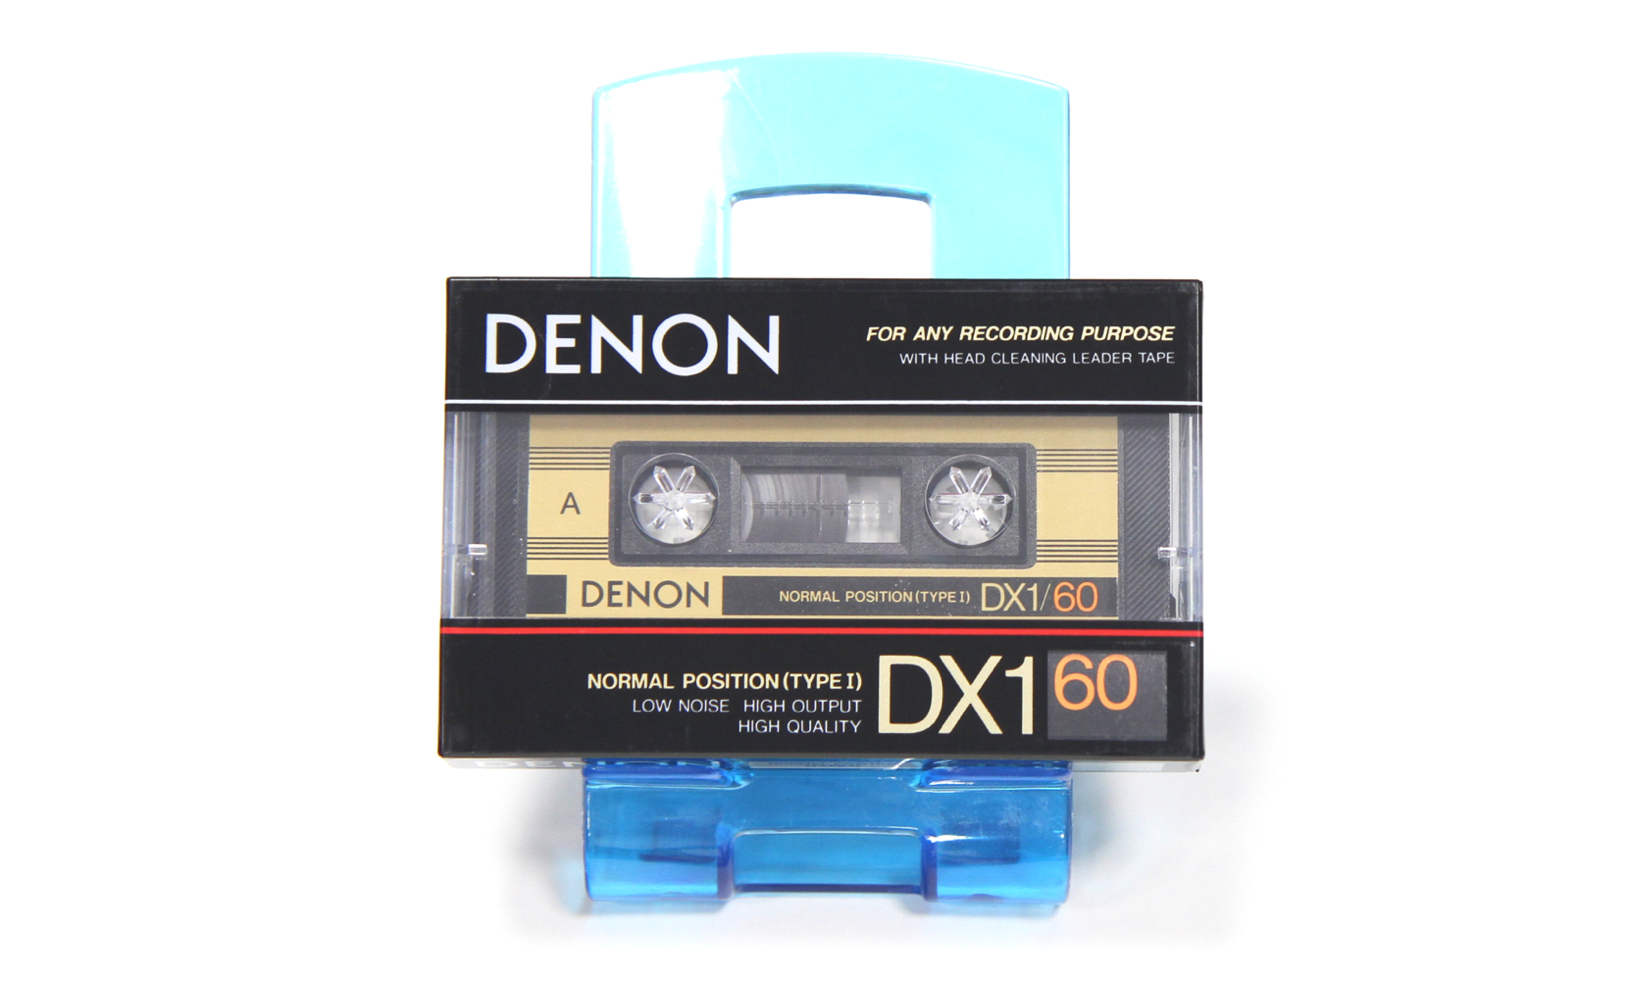 DENON DX1-60 Position Normal